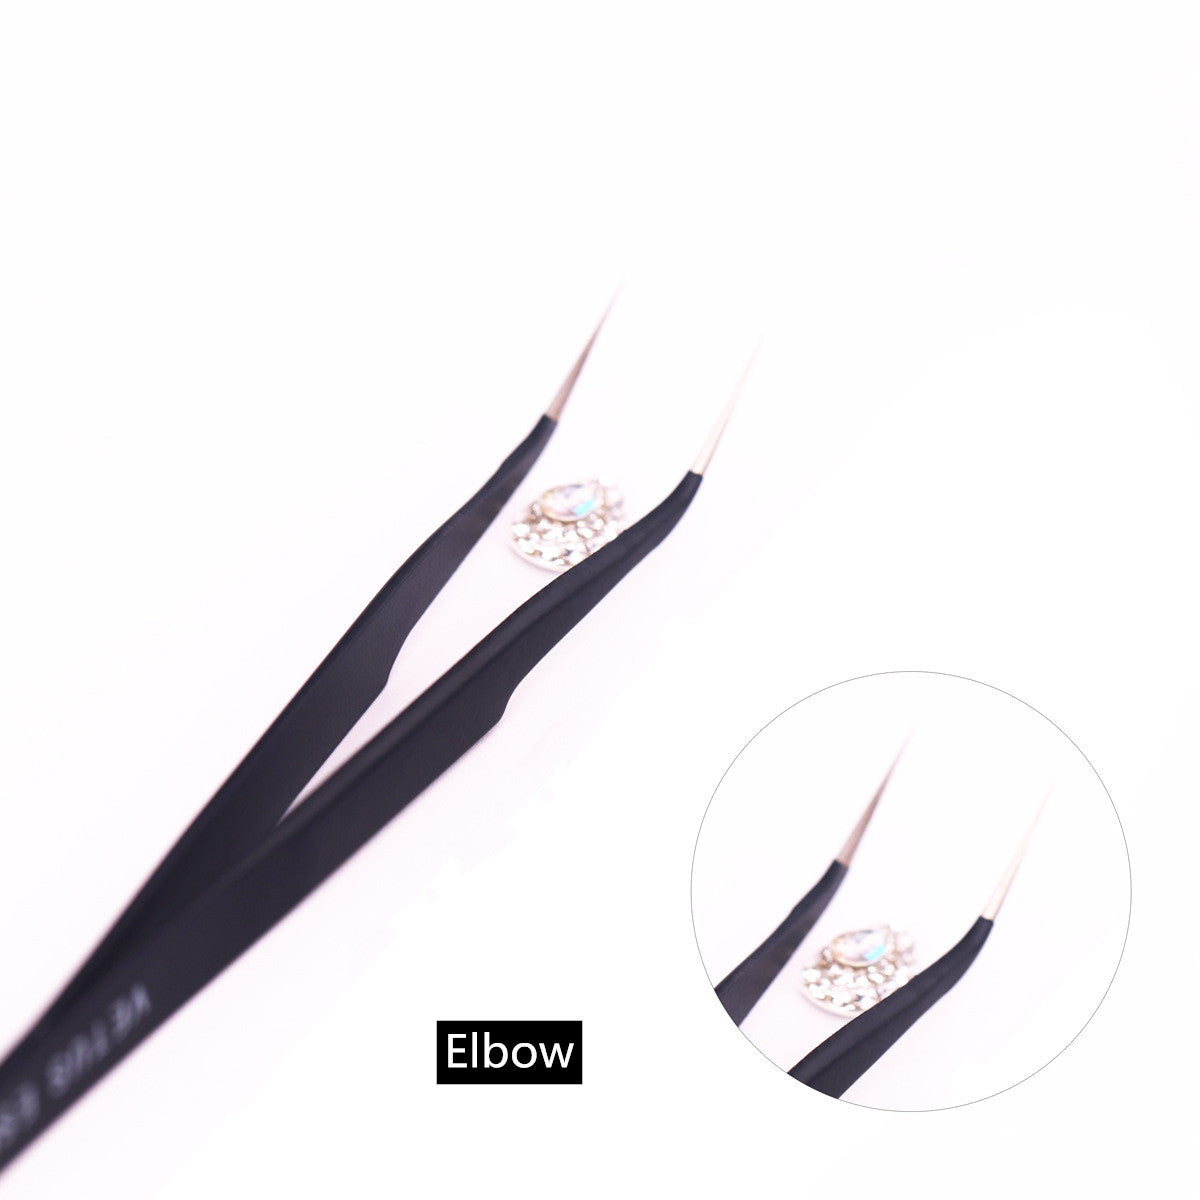 Stainless Steel Anti-static elbow twzeezer nail art tool